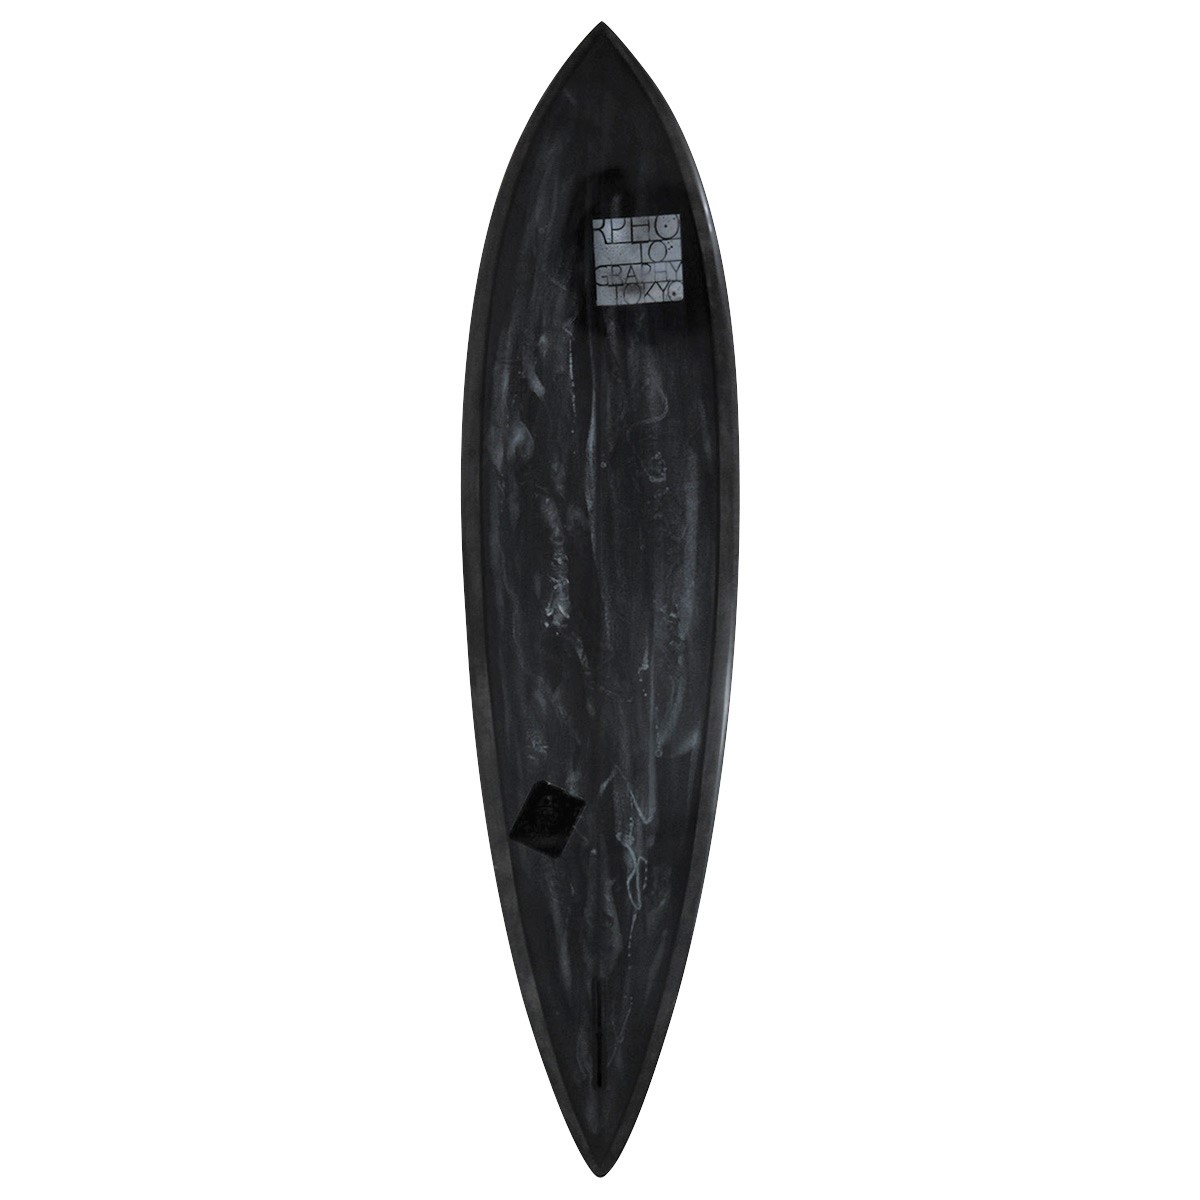 TROUBLE SURFBOARDS / SINGLE PIN 8`0